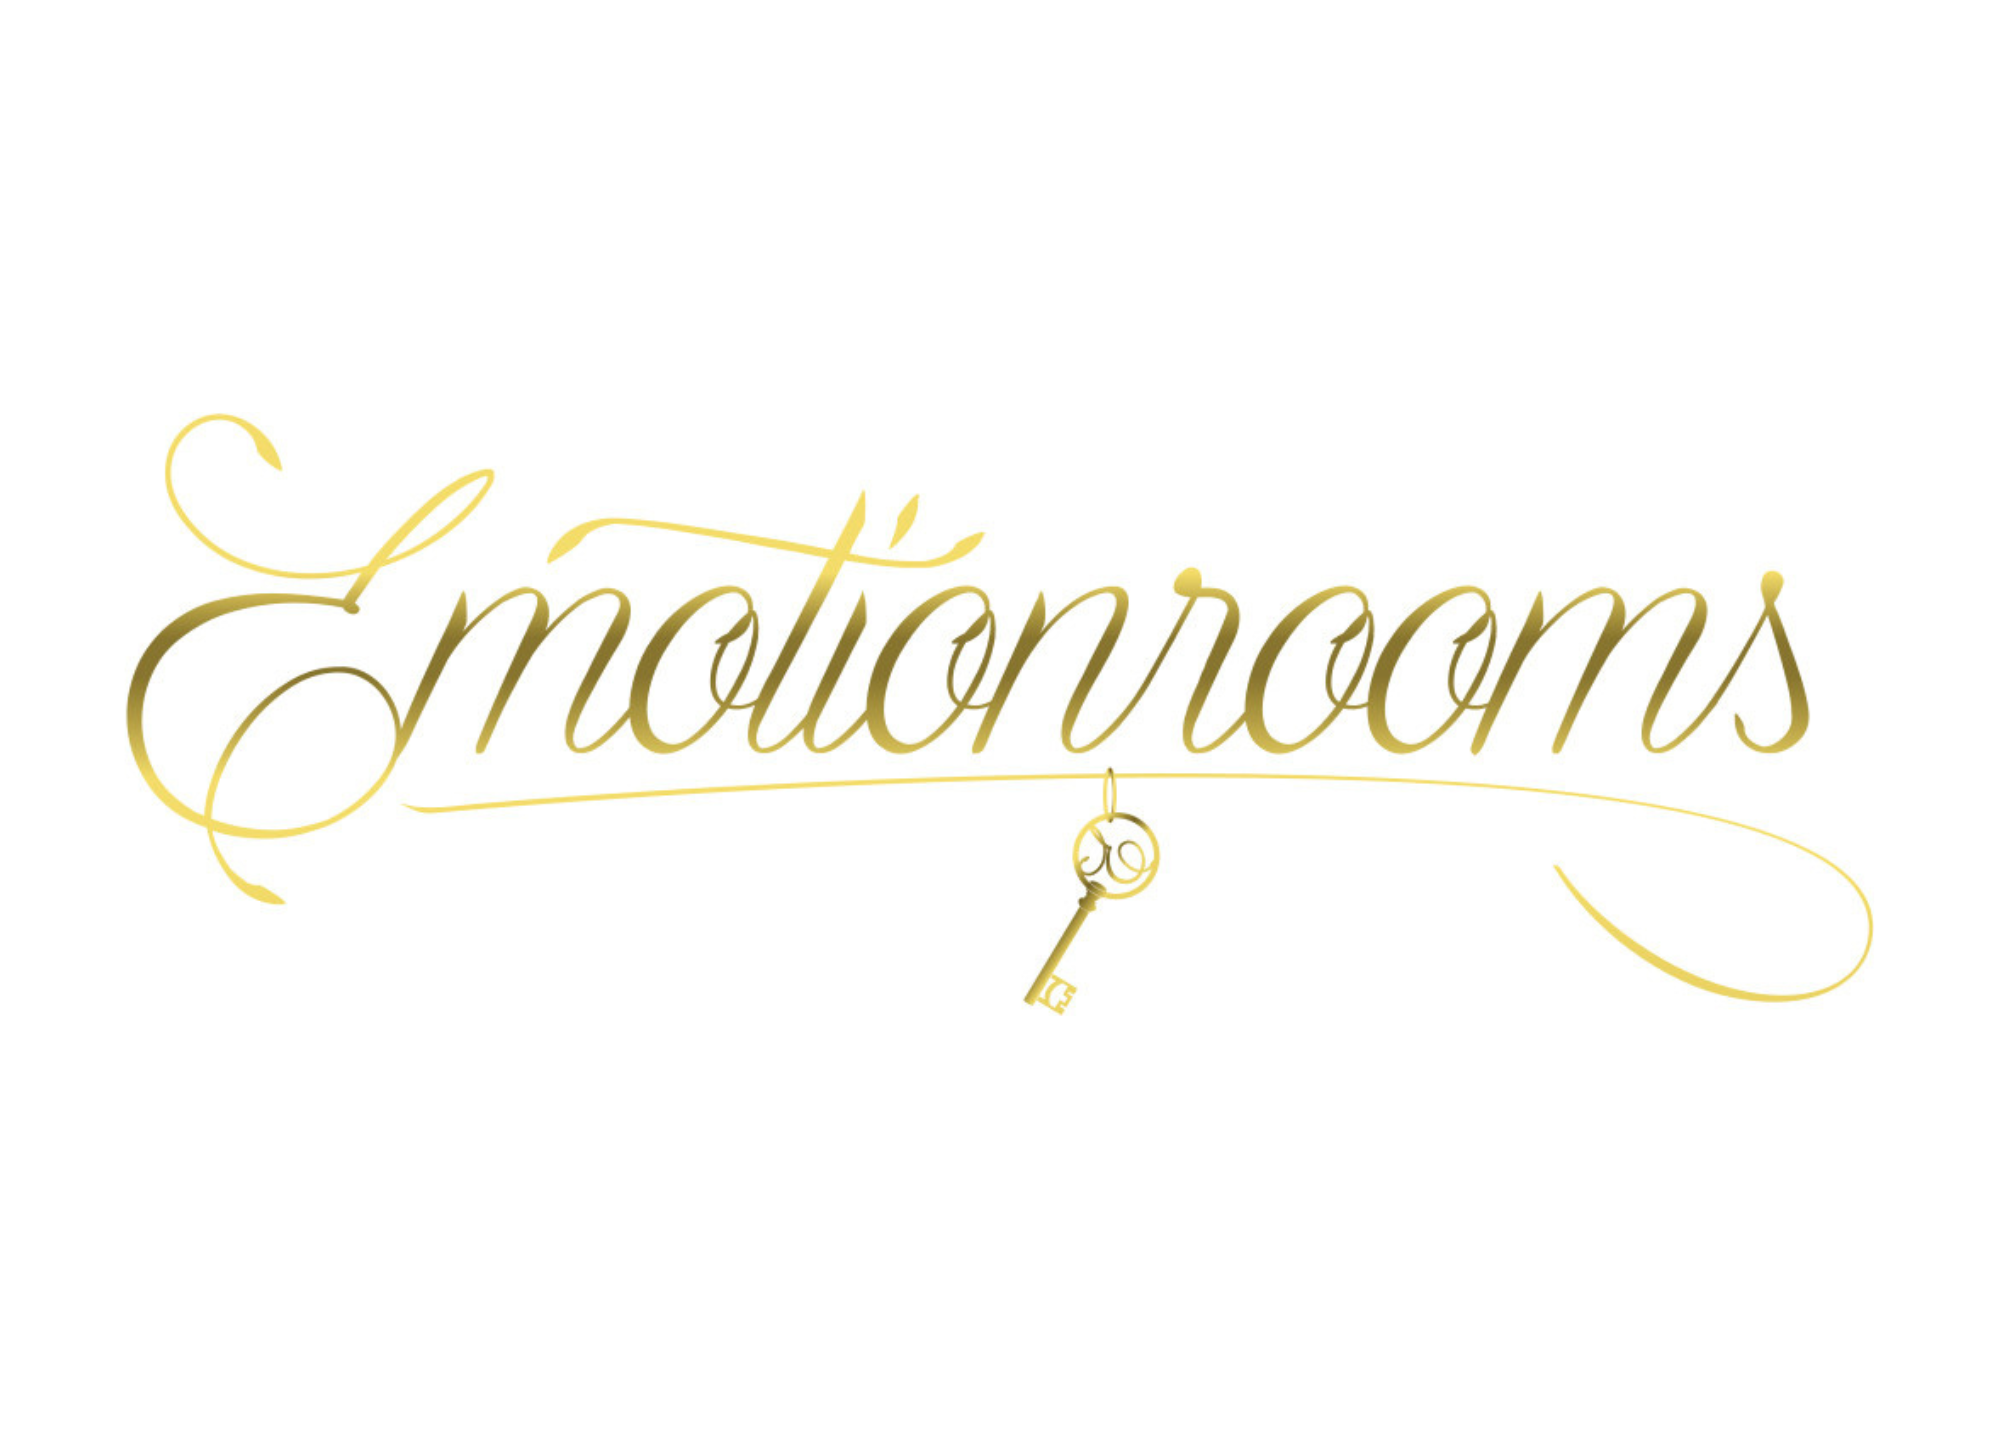 Emotionrooms